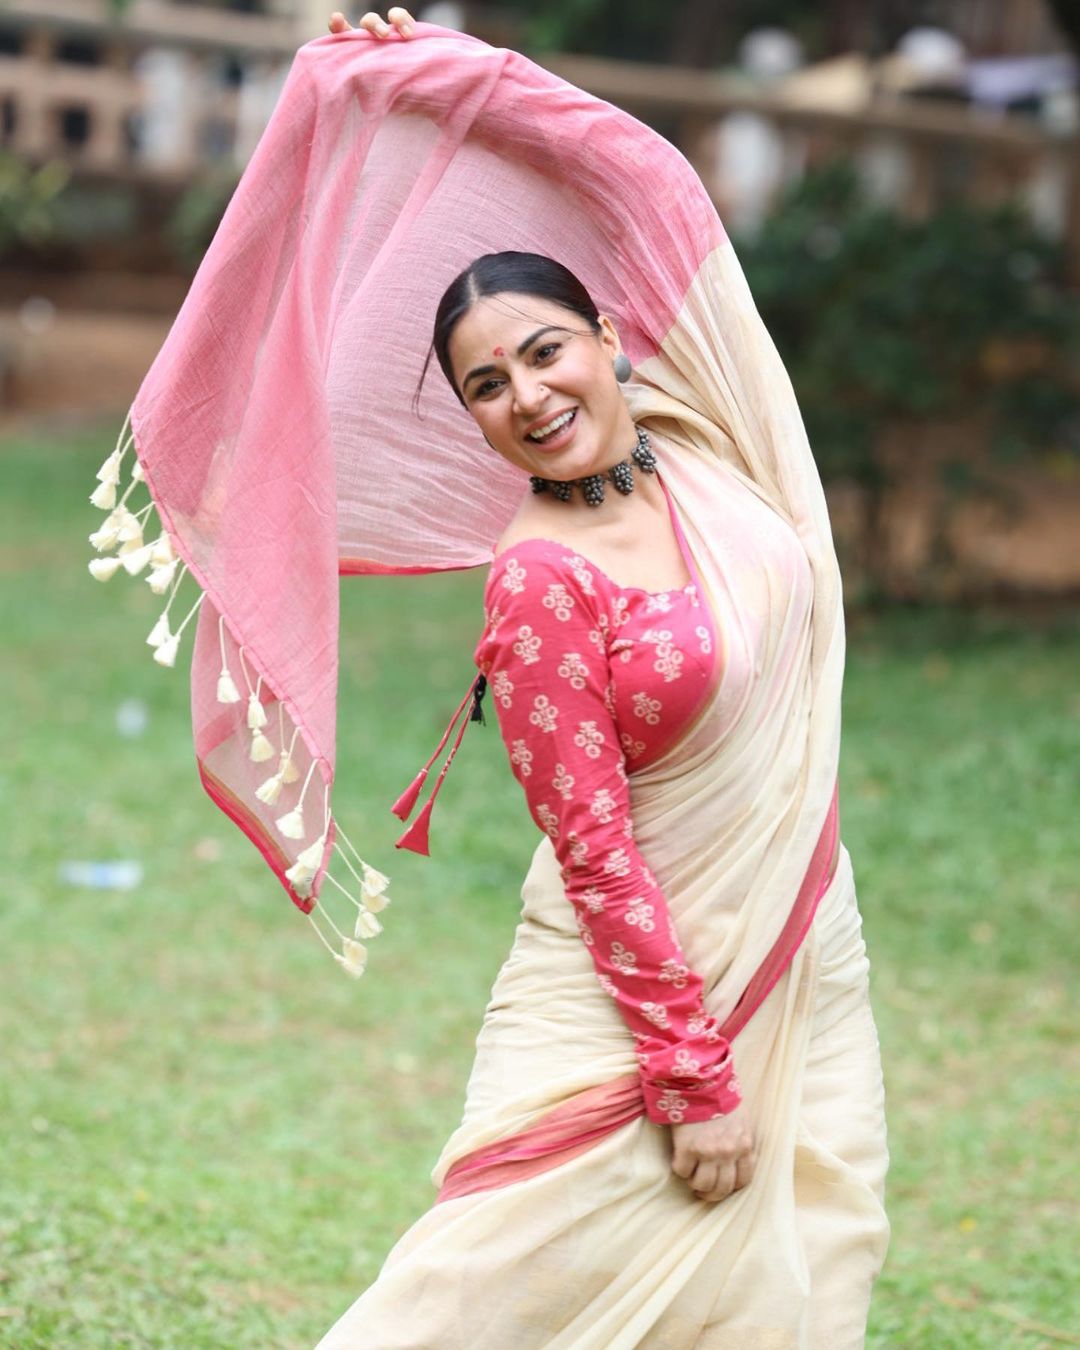 Shweta Tiwari looks angelic in embellished ivory saree and embroidered  blouse in latest photoshoot : Bollywood News - Bollywood Hungama